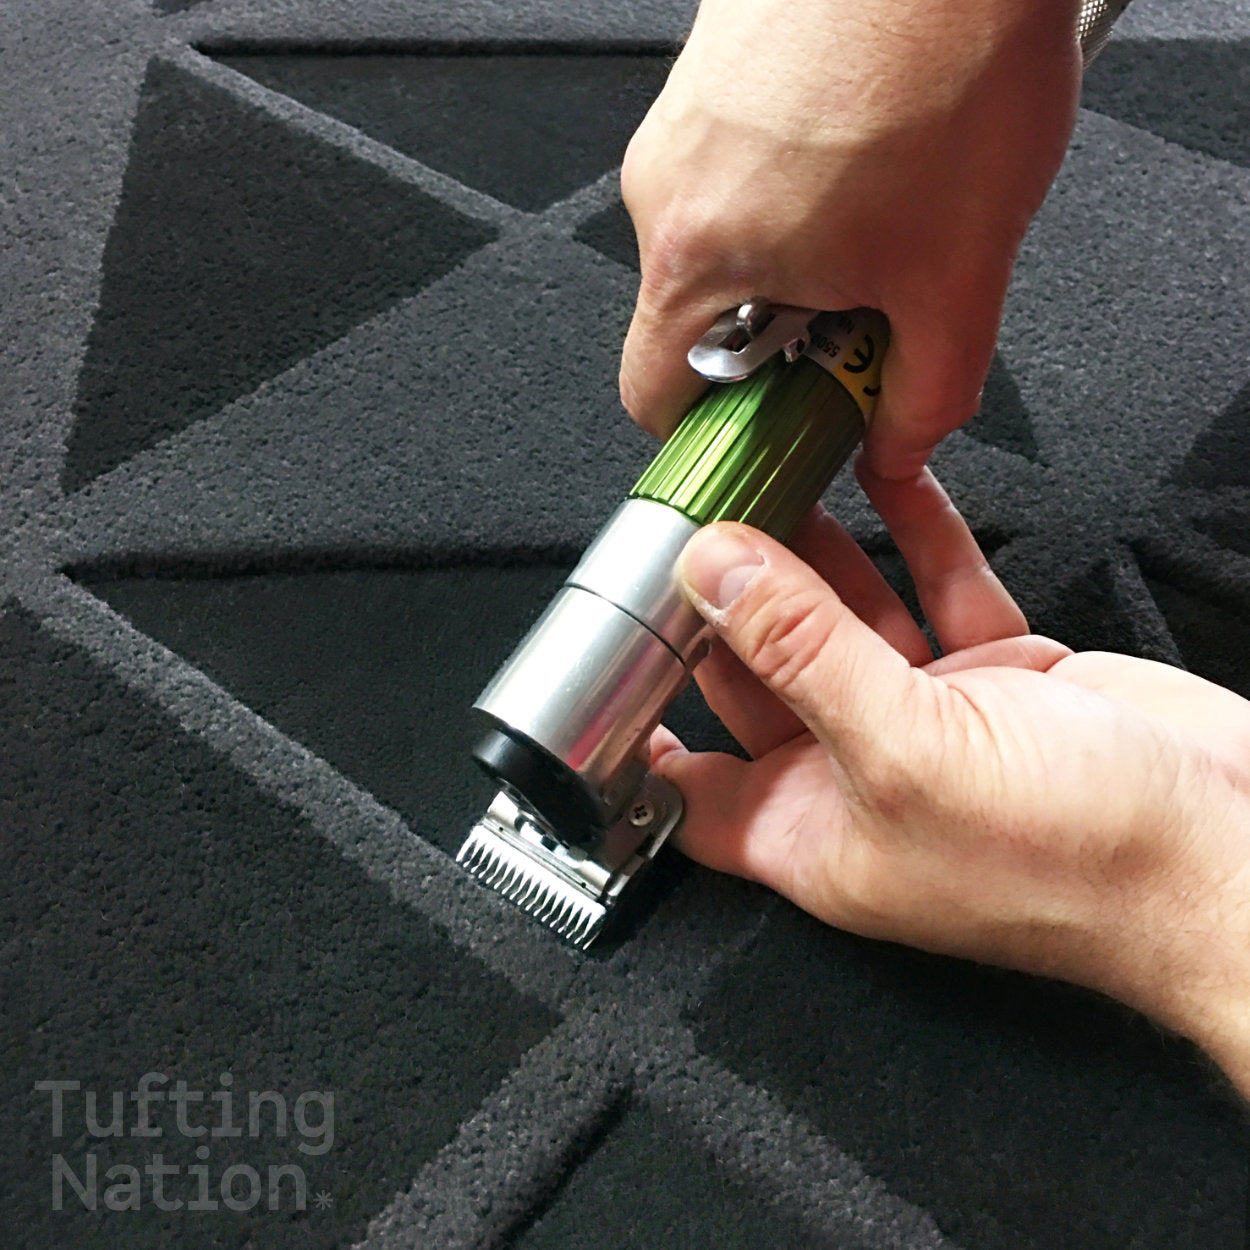 Professional Carpet Carver to sculpt Handmade Tufted Rug | Tufting Nation